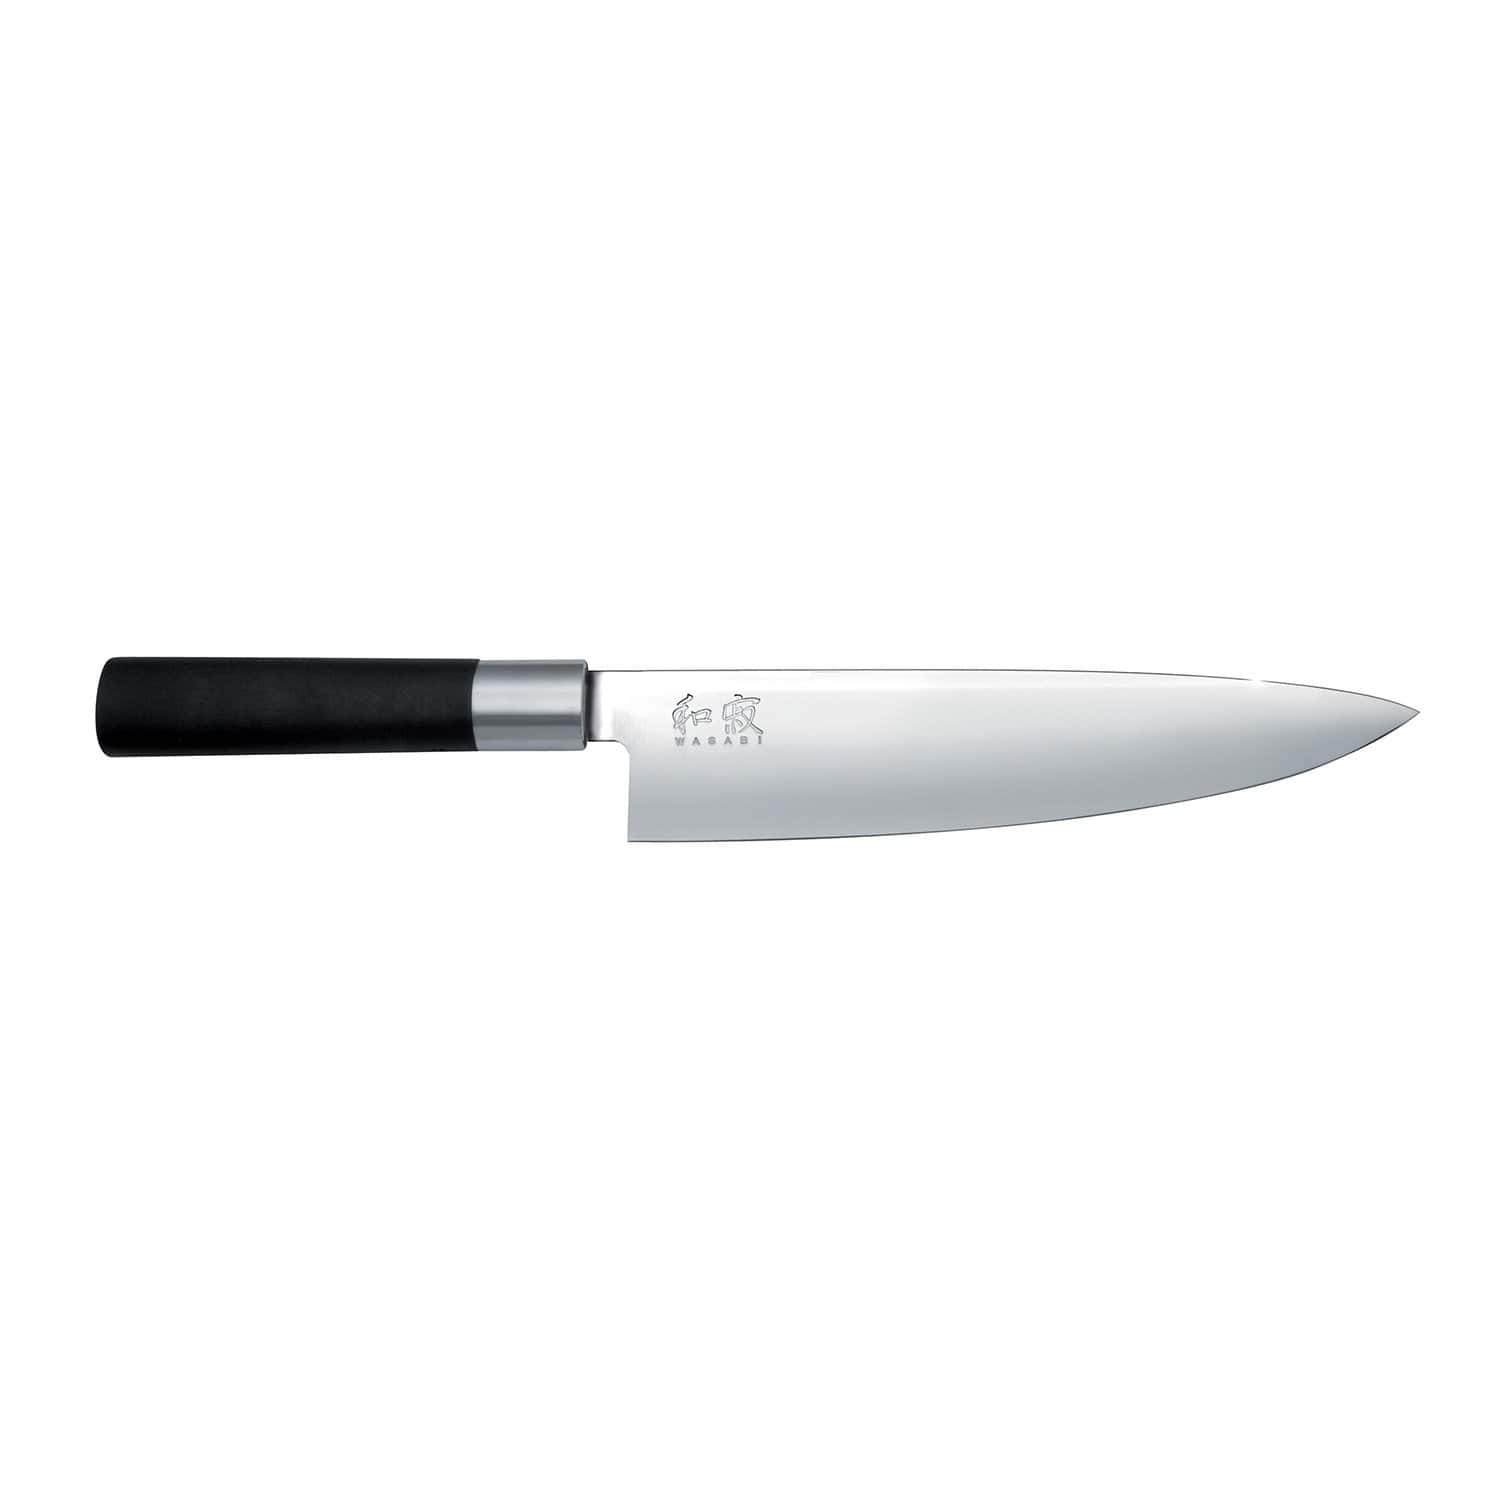 WASABI BLACK CHEF'S KNIFE 20CM